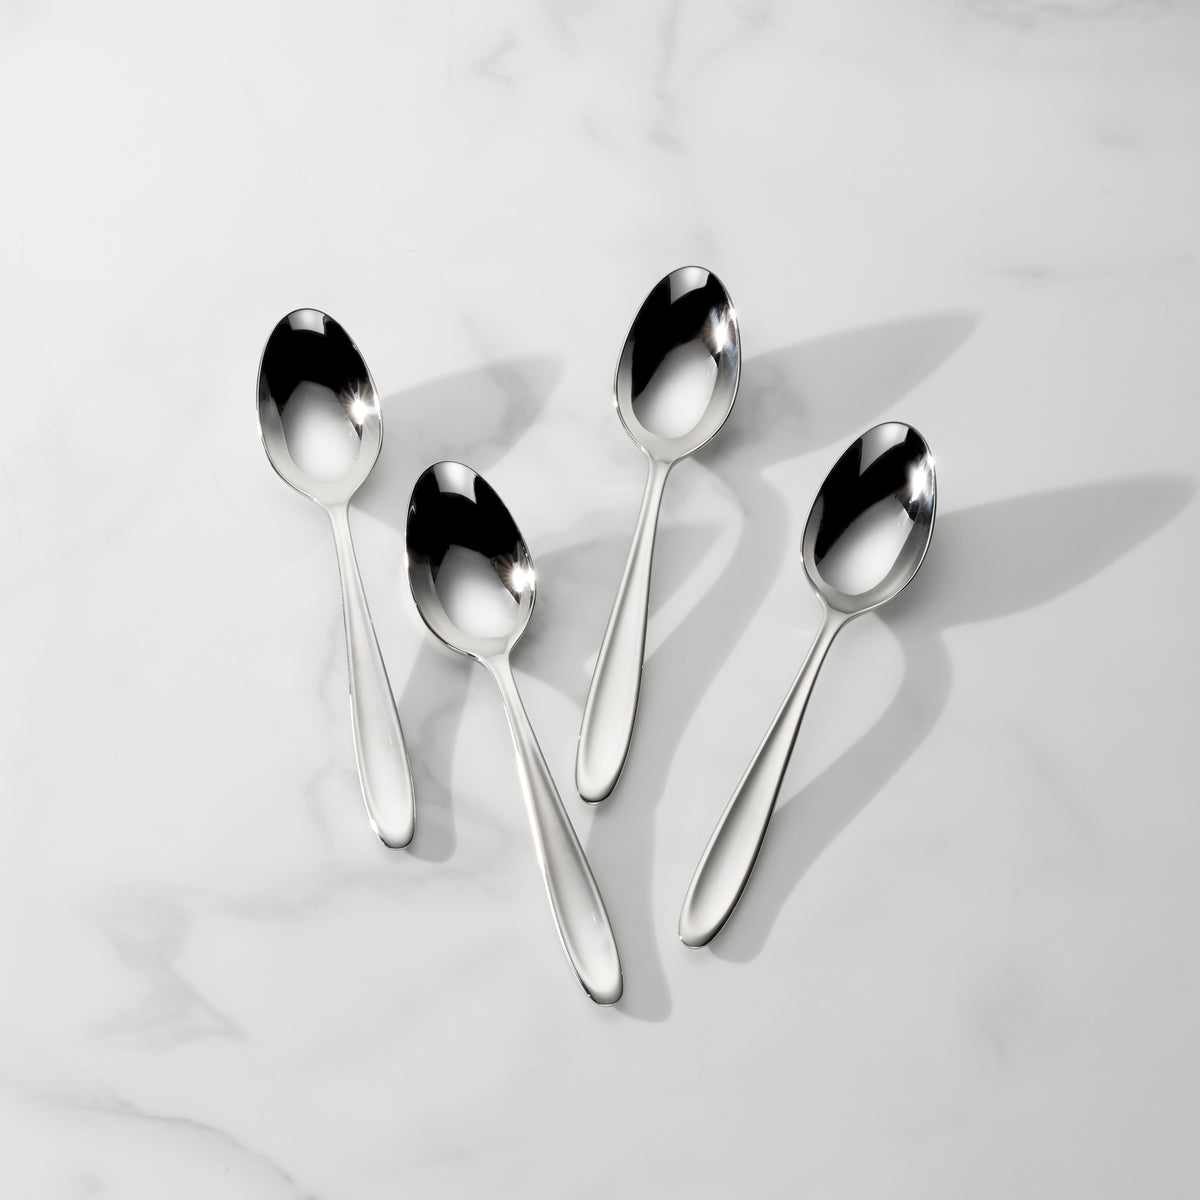 Cantera Dinner Spoons, Set of 4 – Lenox Corporation